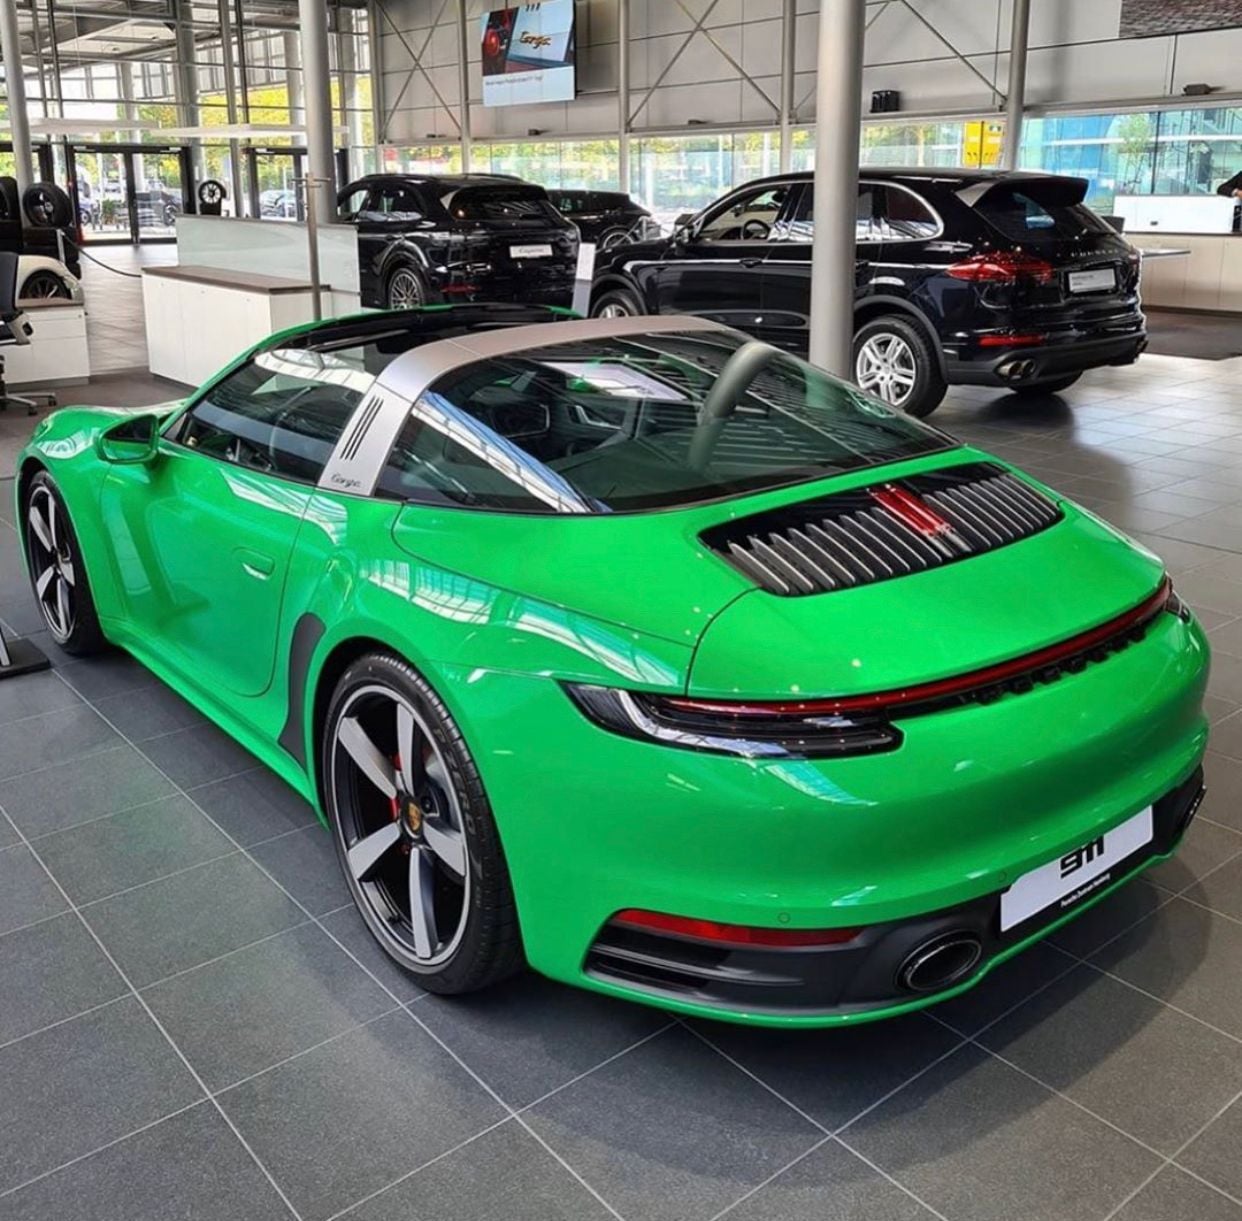 Python Green color exterior - Page 11 - Rennlist - Porsche Discussion ...